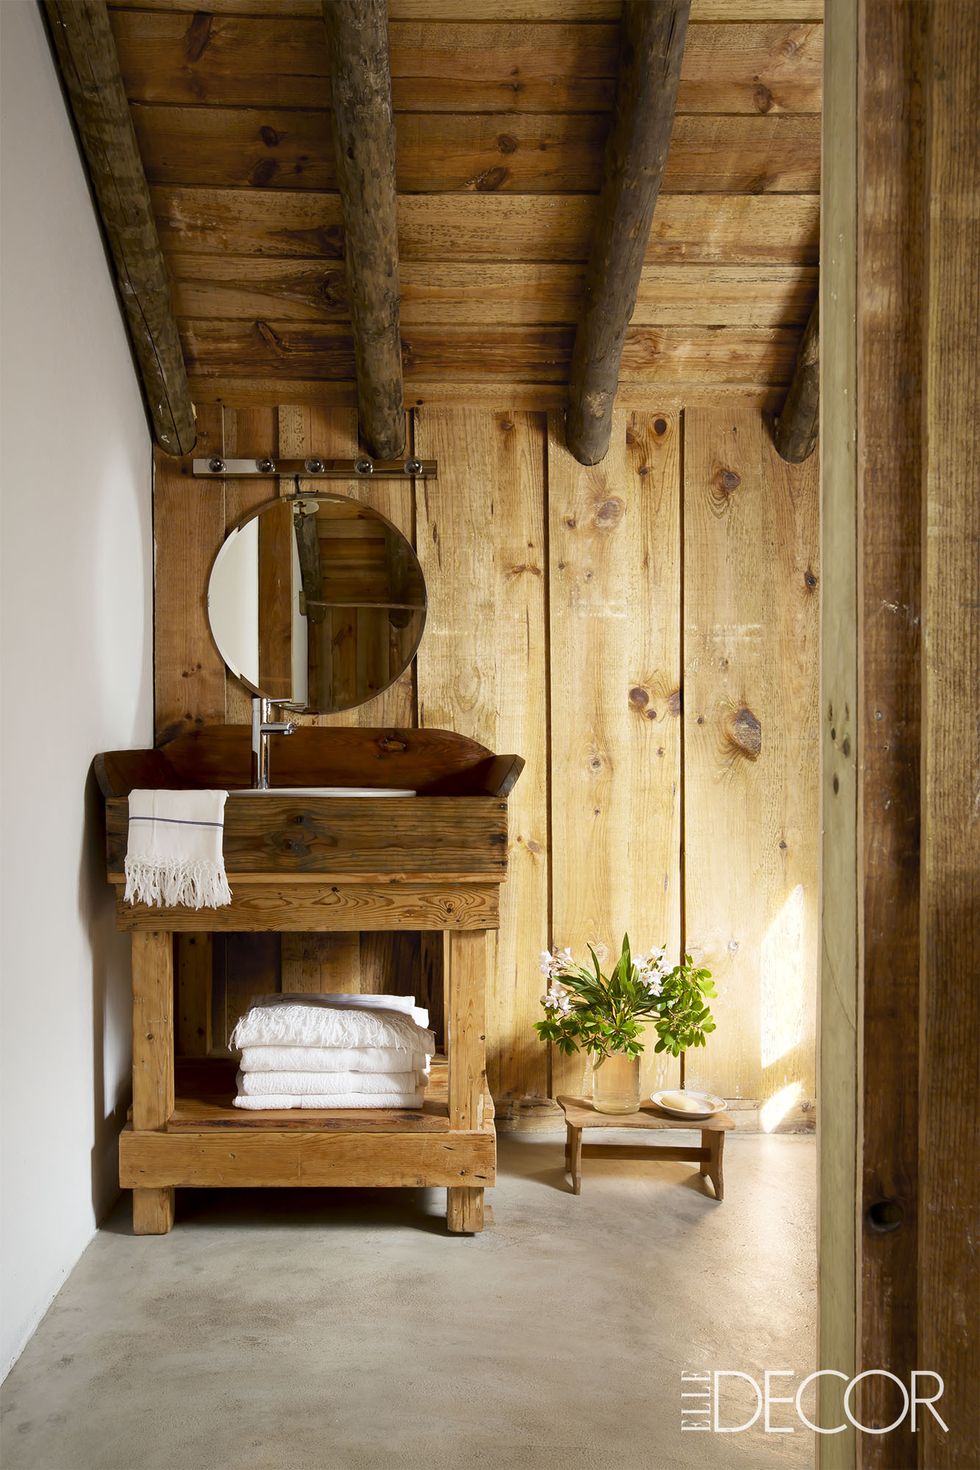 23 Farmhouse Bathroom Shelf Ideas to Bring Some Charm